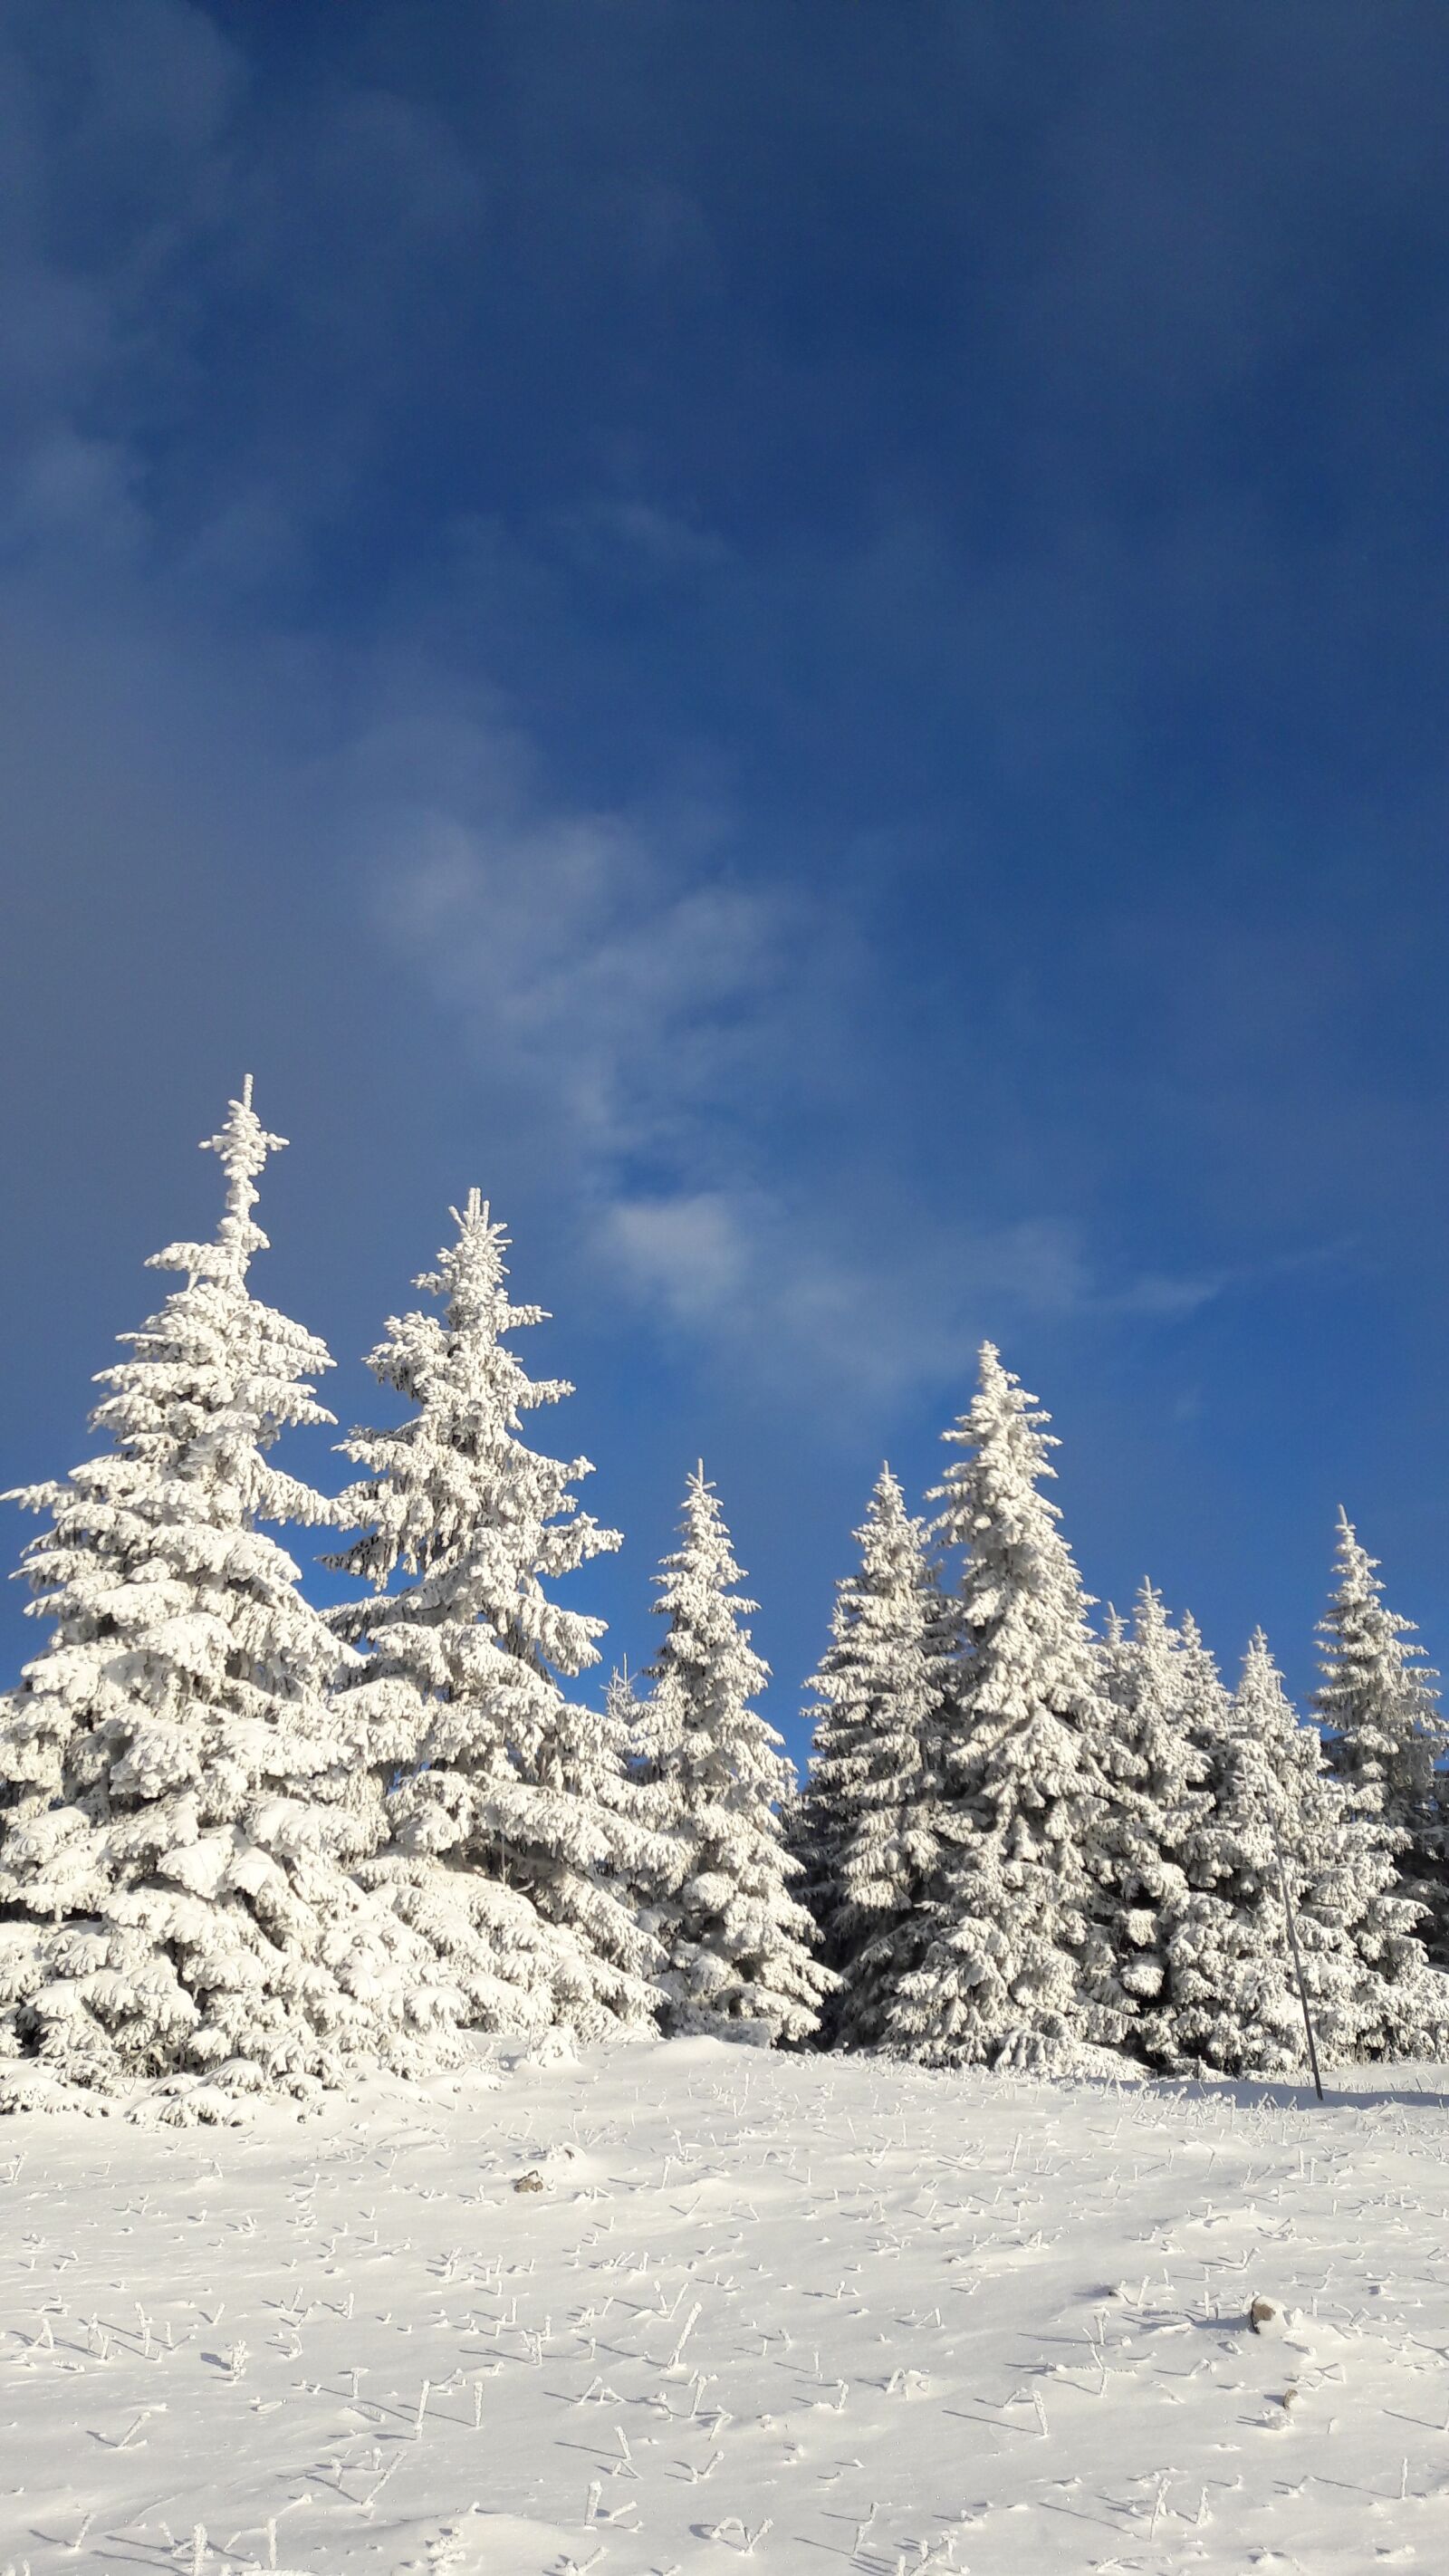 Samsung Galaxy A3(2016) sample photo. Snowy trees, winter fun photography